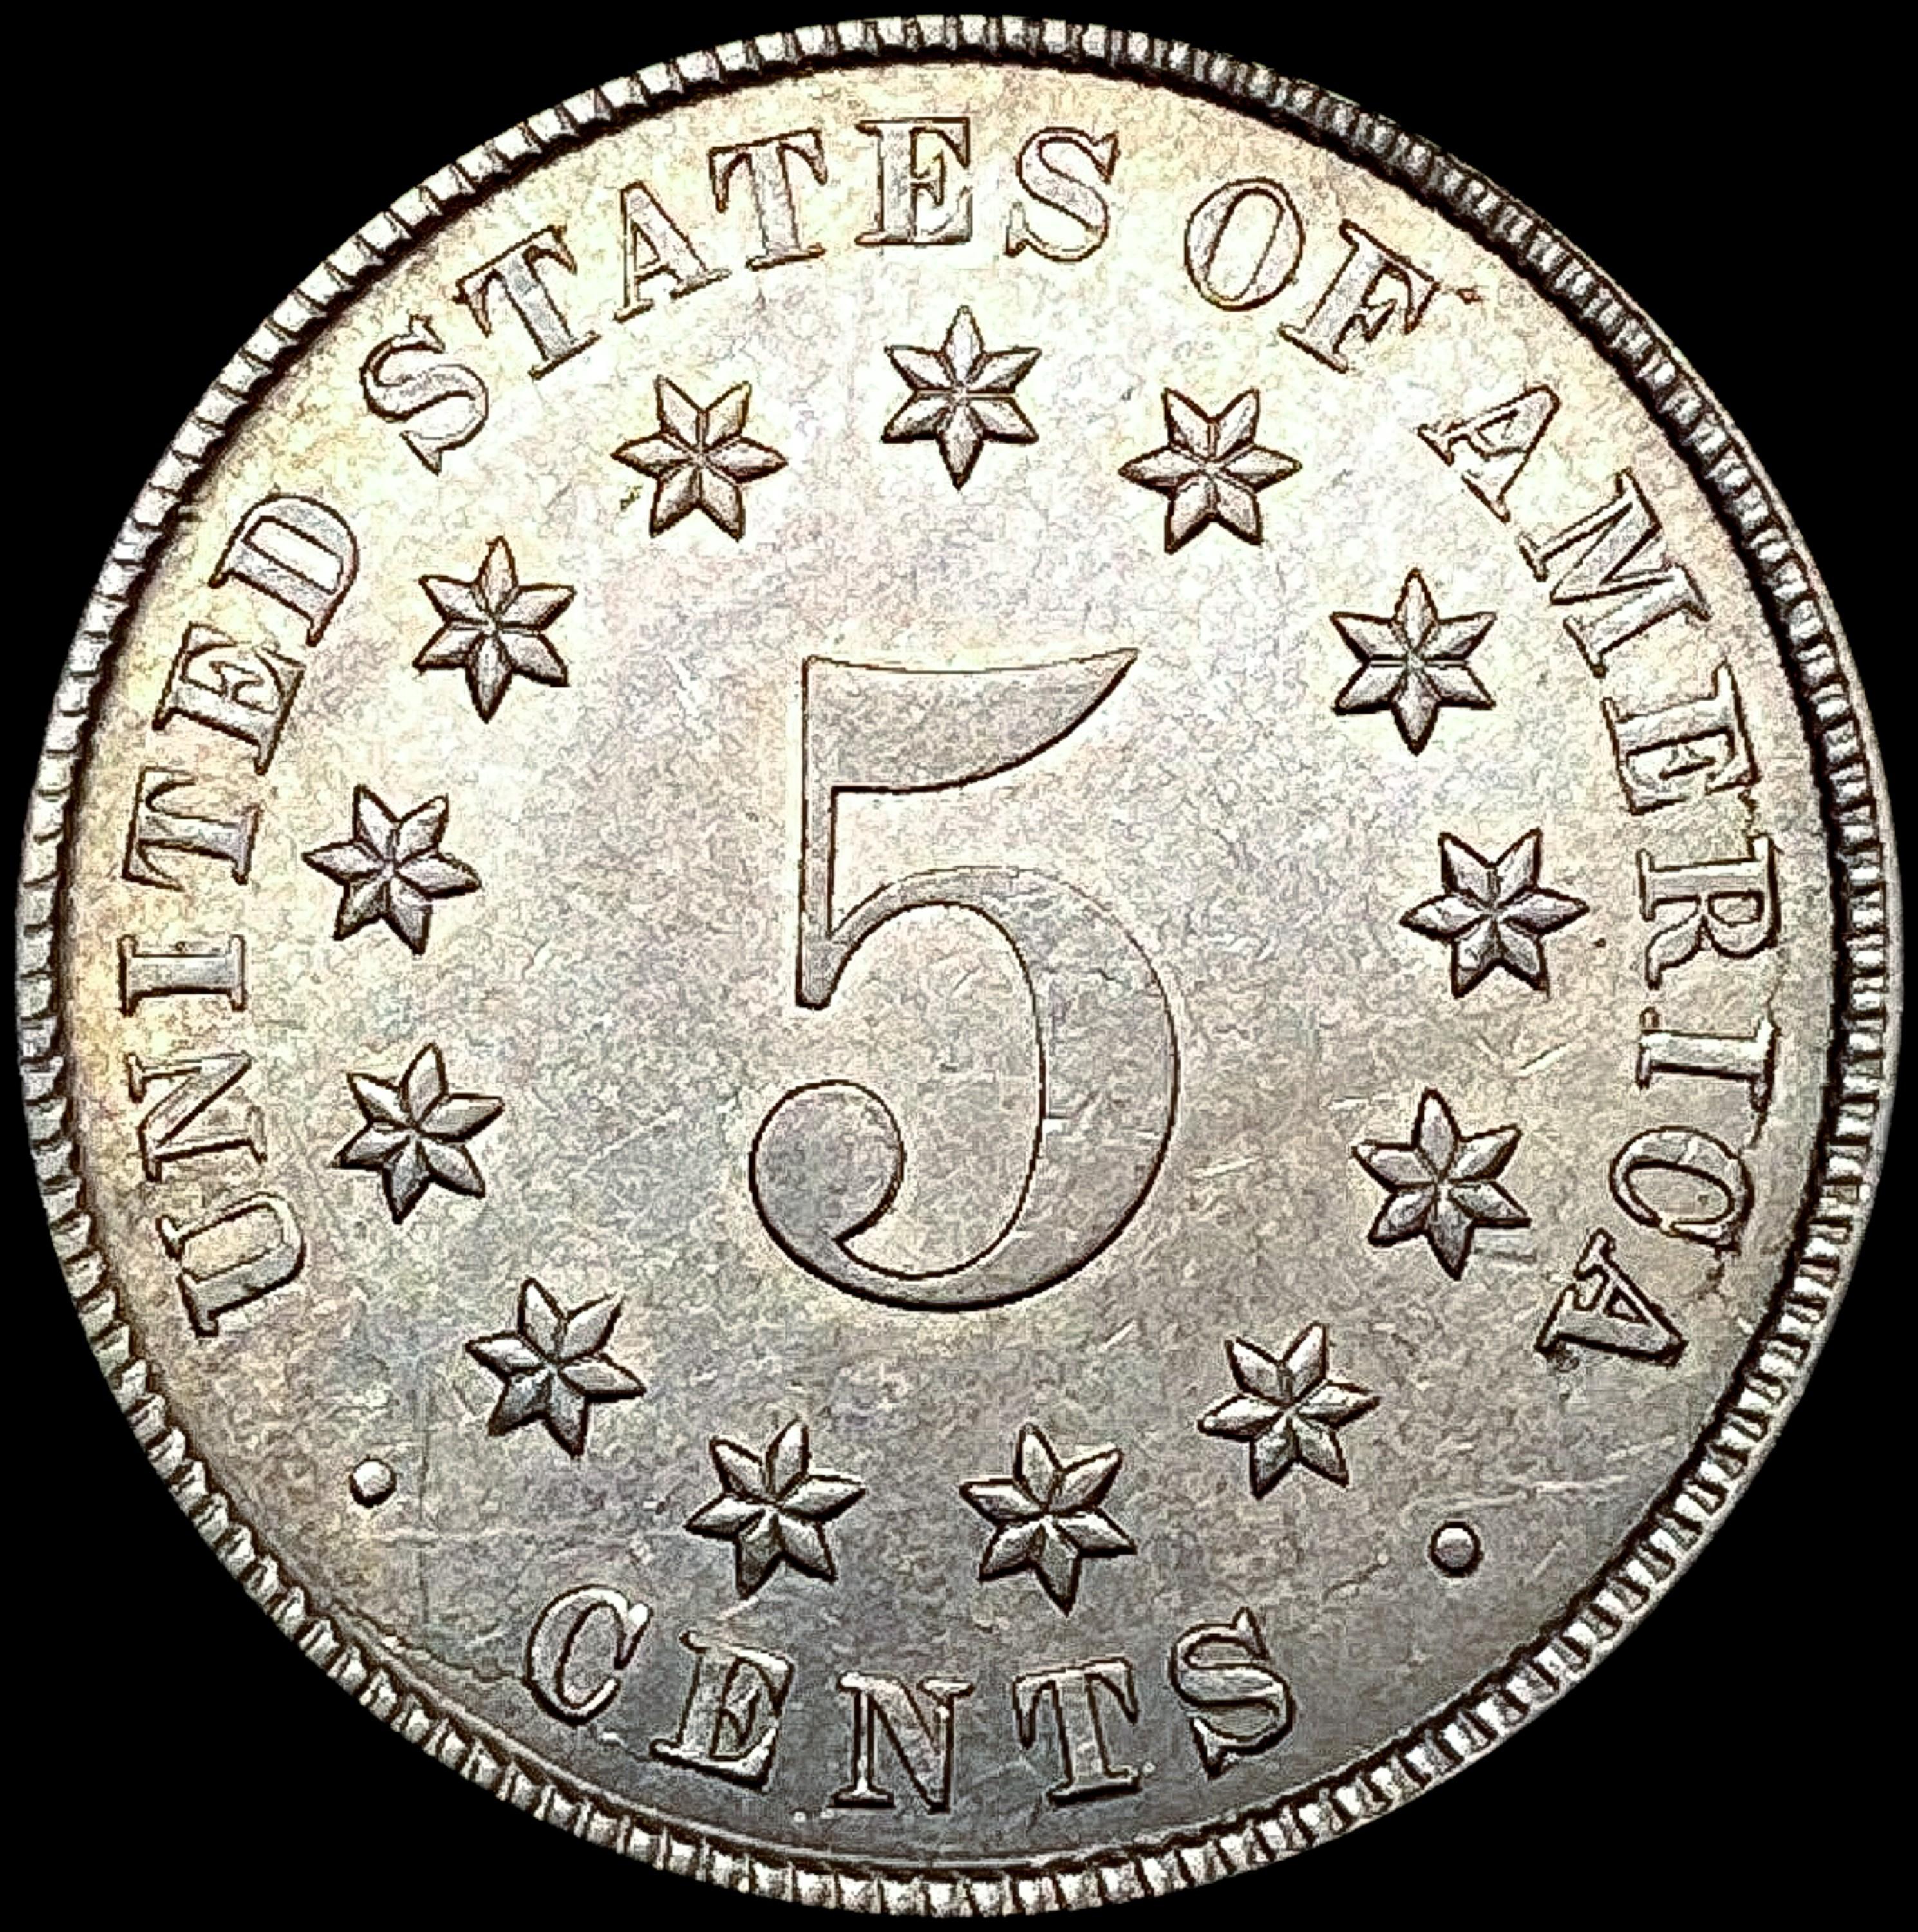 1883 Shield Nickel UNCIRCULATED